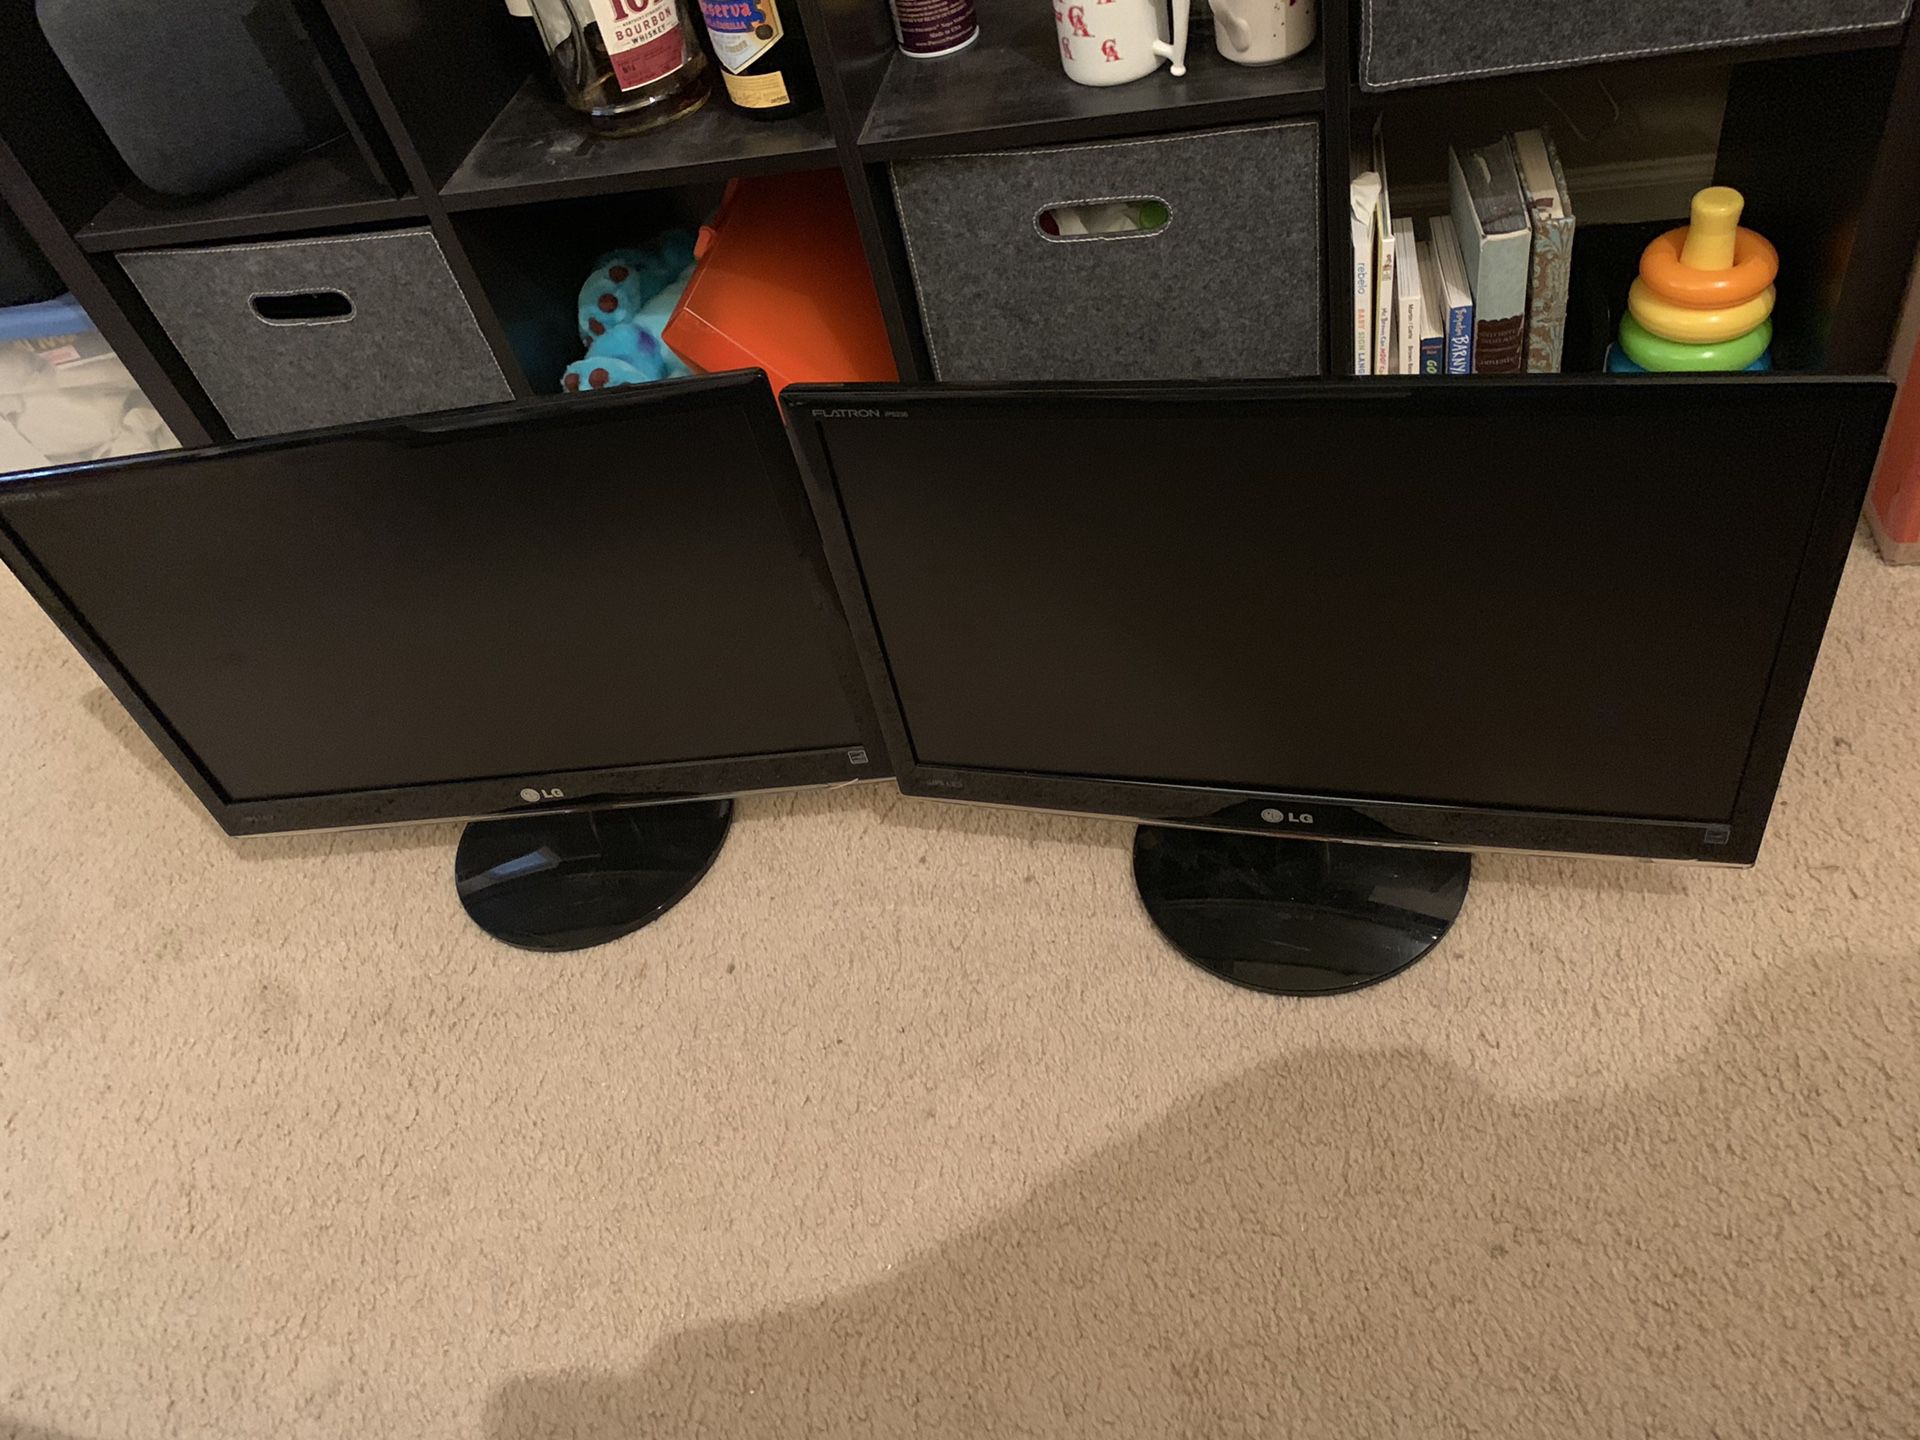 2 LG computer monitors